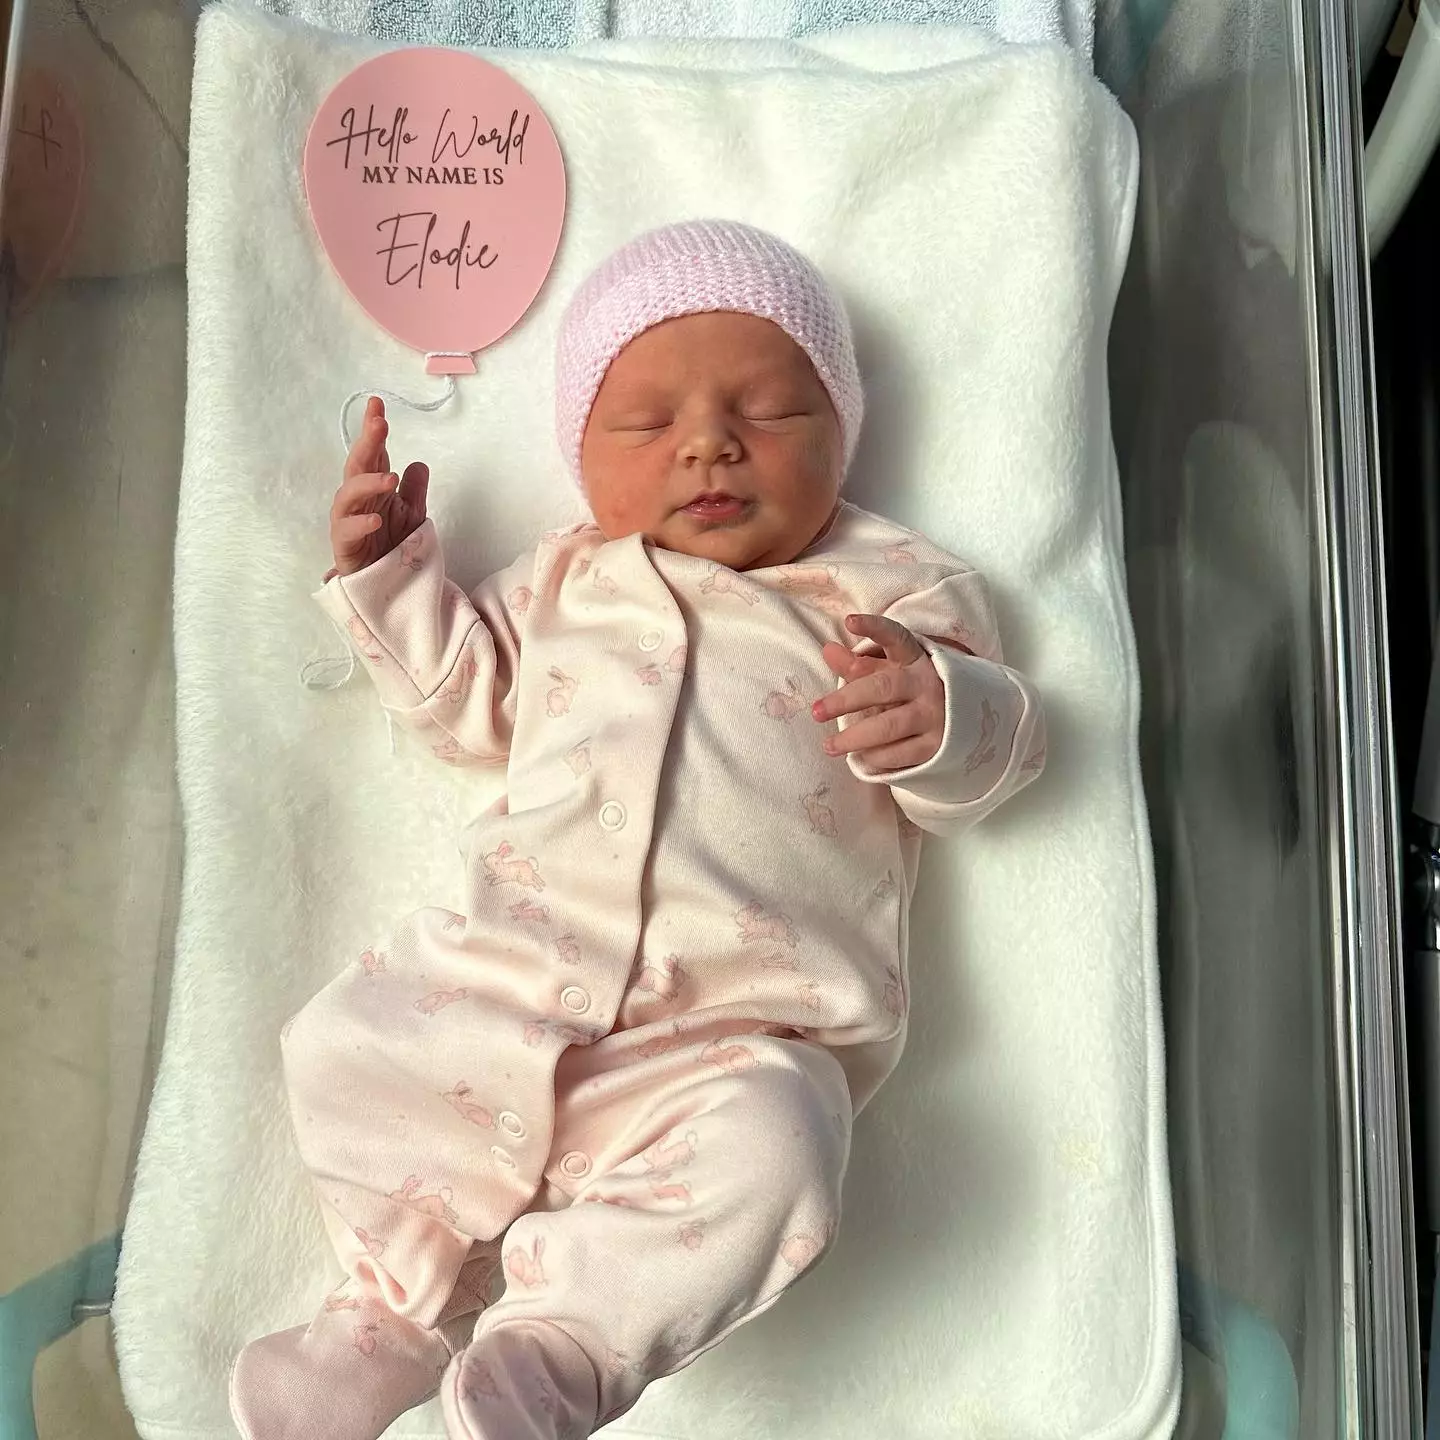 Millie Radford has welcomed a little girl named Elodie-Jade.